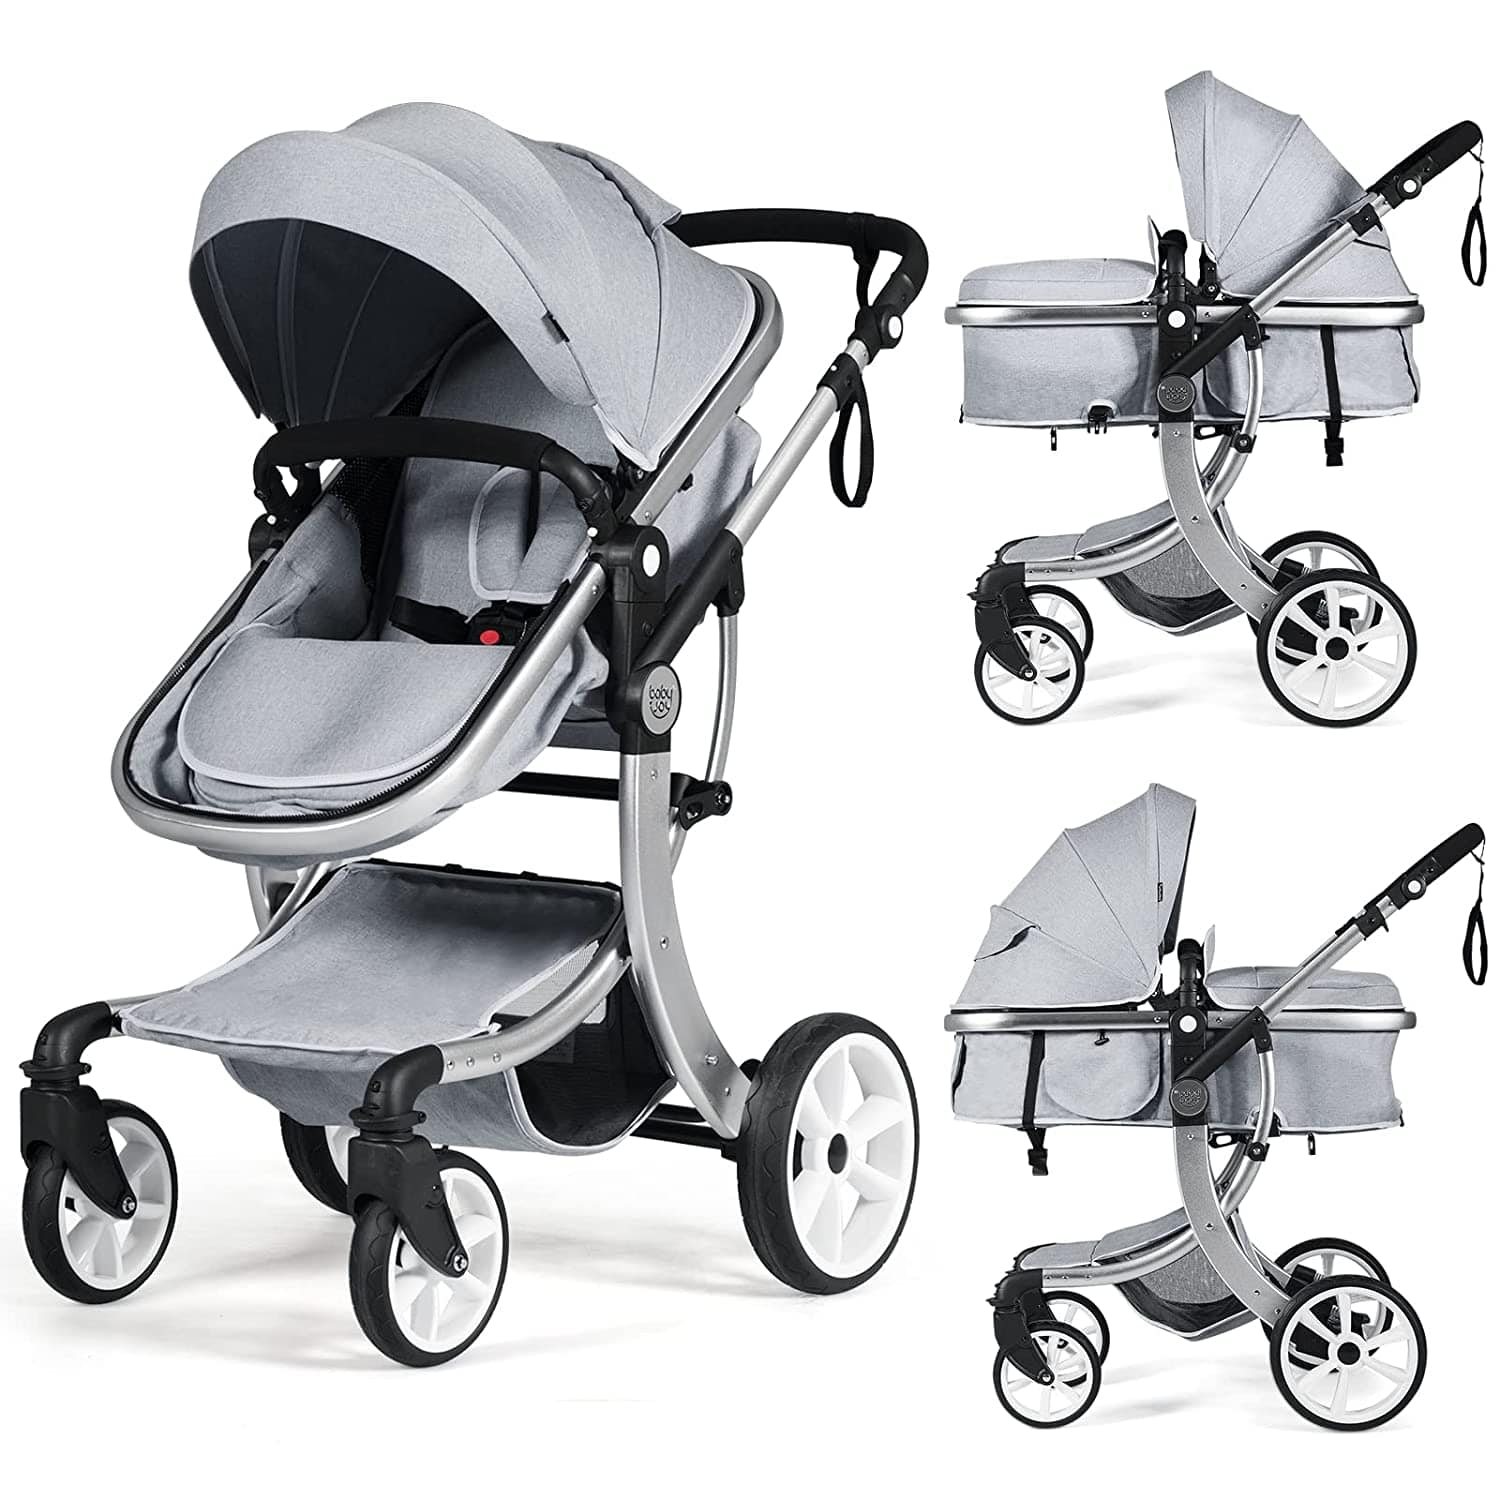 Proactive Baby BabyJoy 2 in 1 Convertible Baby Stroller